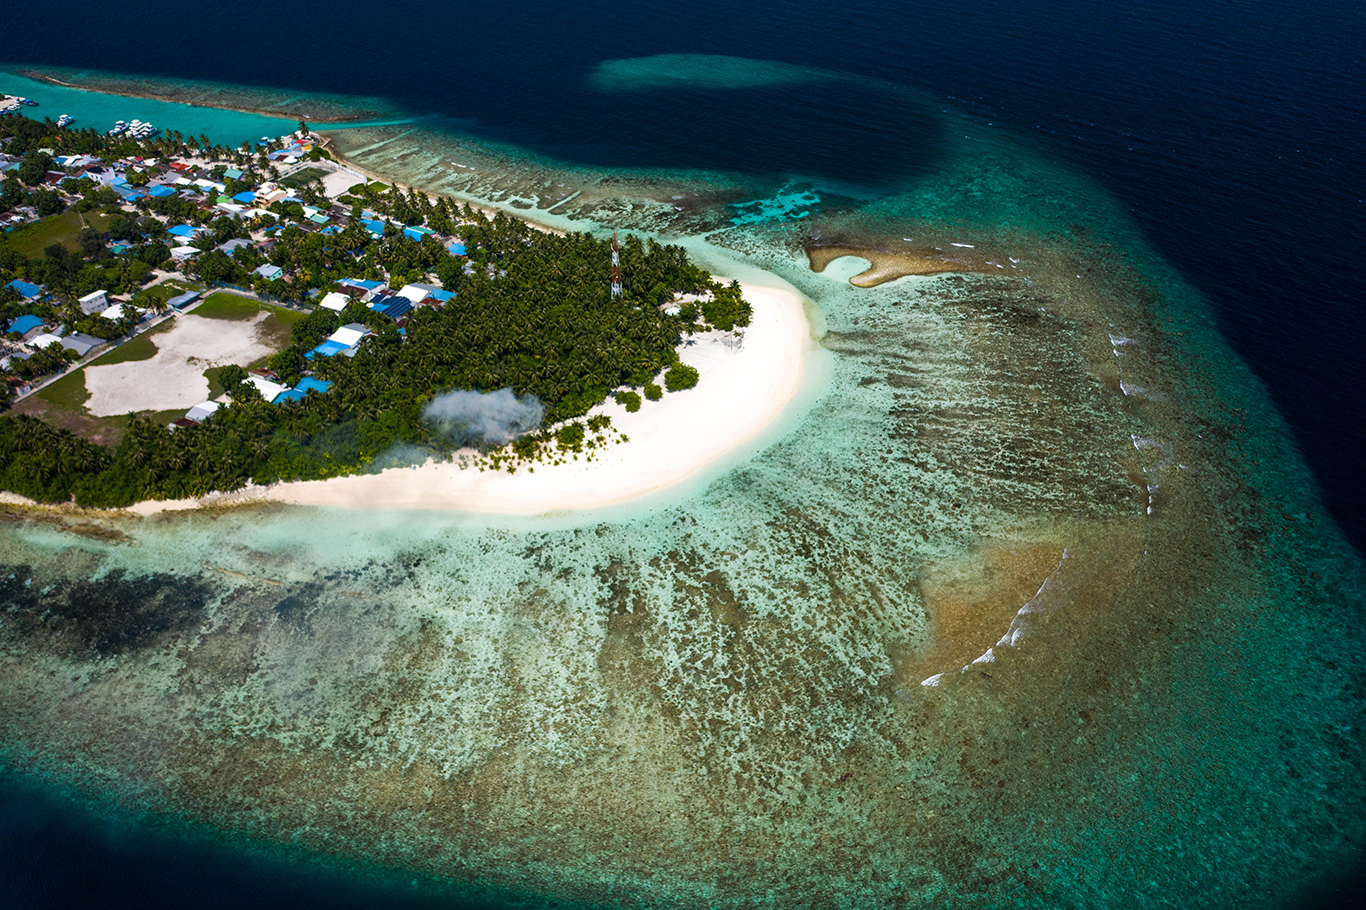 Photo Credit: Wild Maldives via Google Images